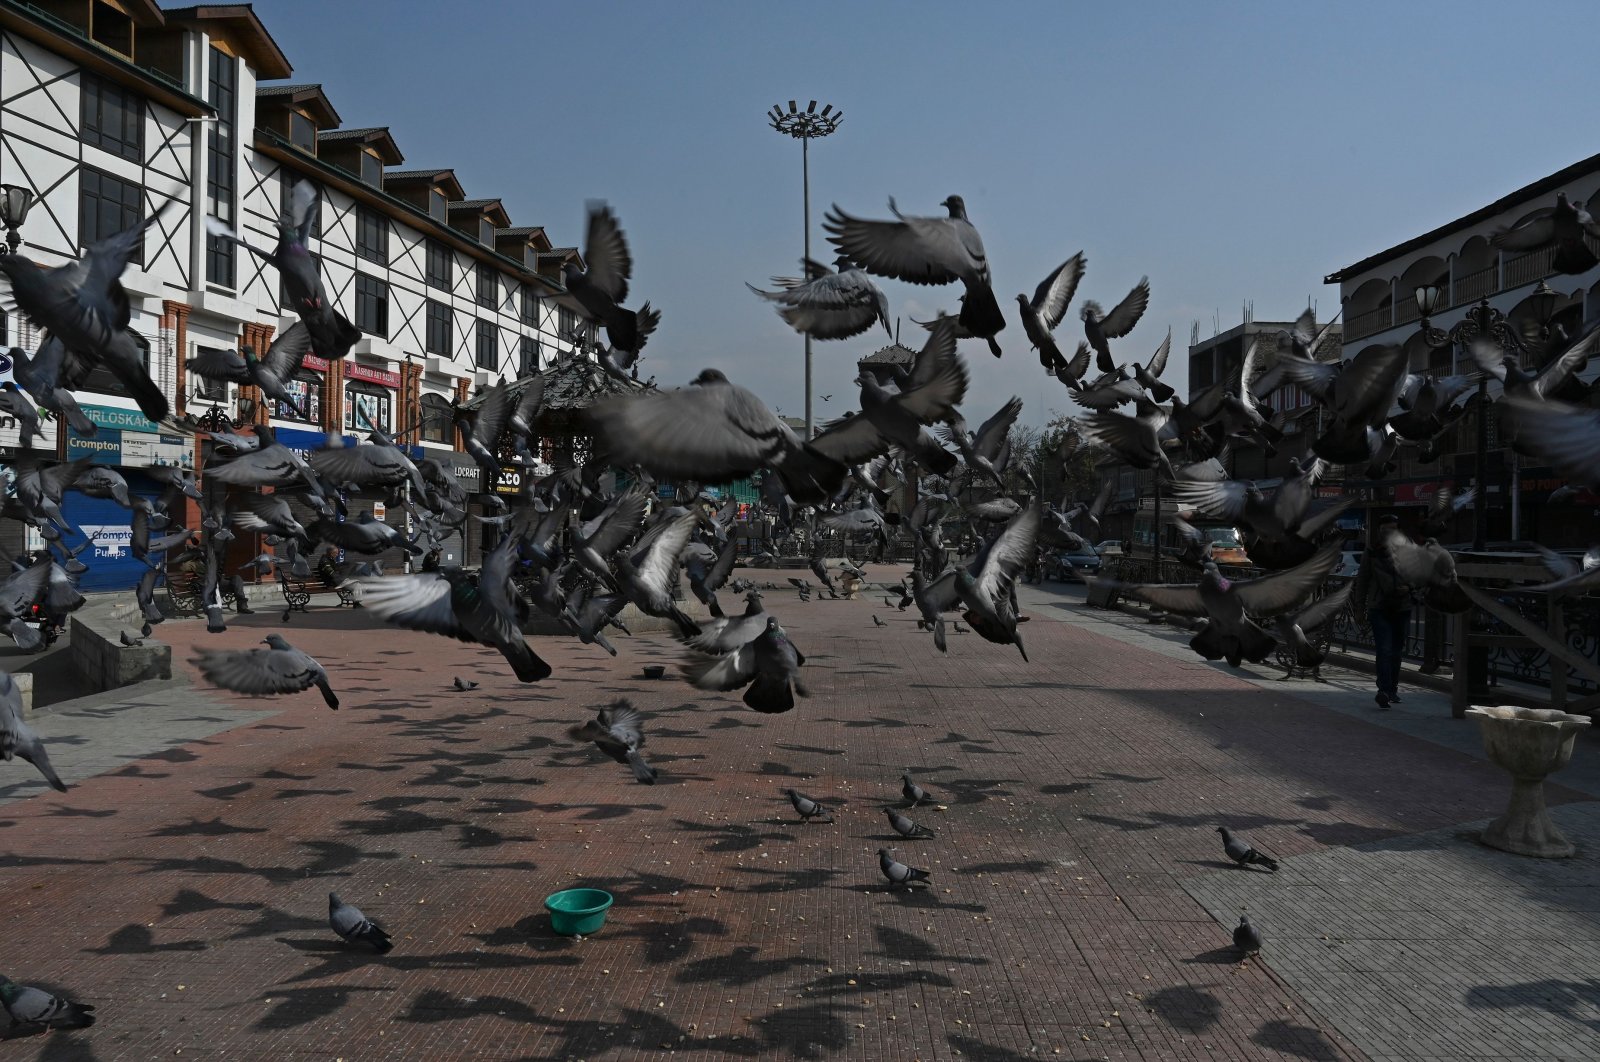 Pigeons take flight in a square in Srinagar, Kashmir, Oct. 31, 2020. (AFP Photo)